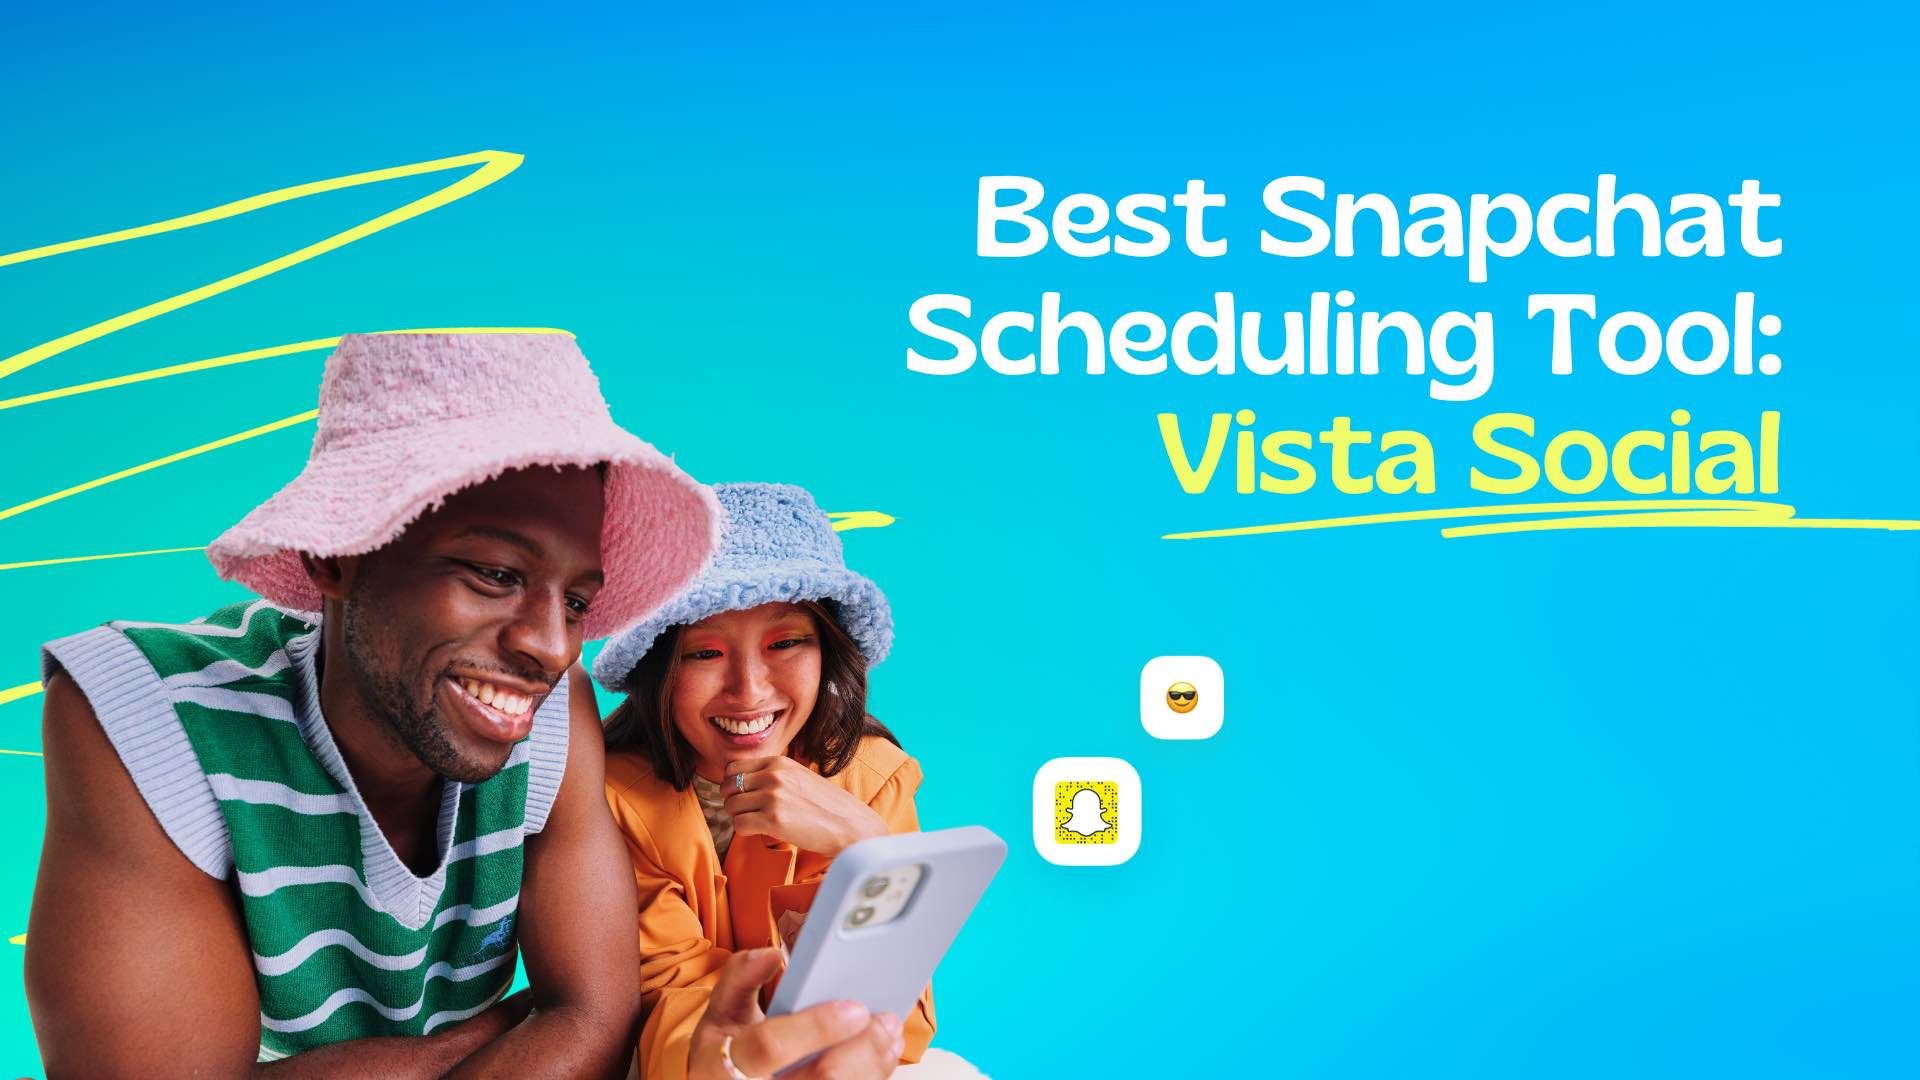 Best Snapchat Scheduling Tool: Vista Social - 26